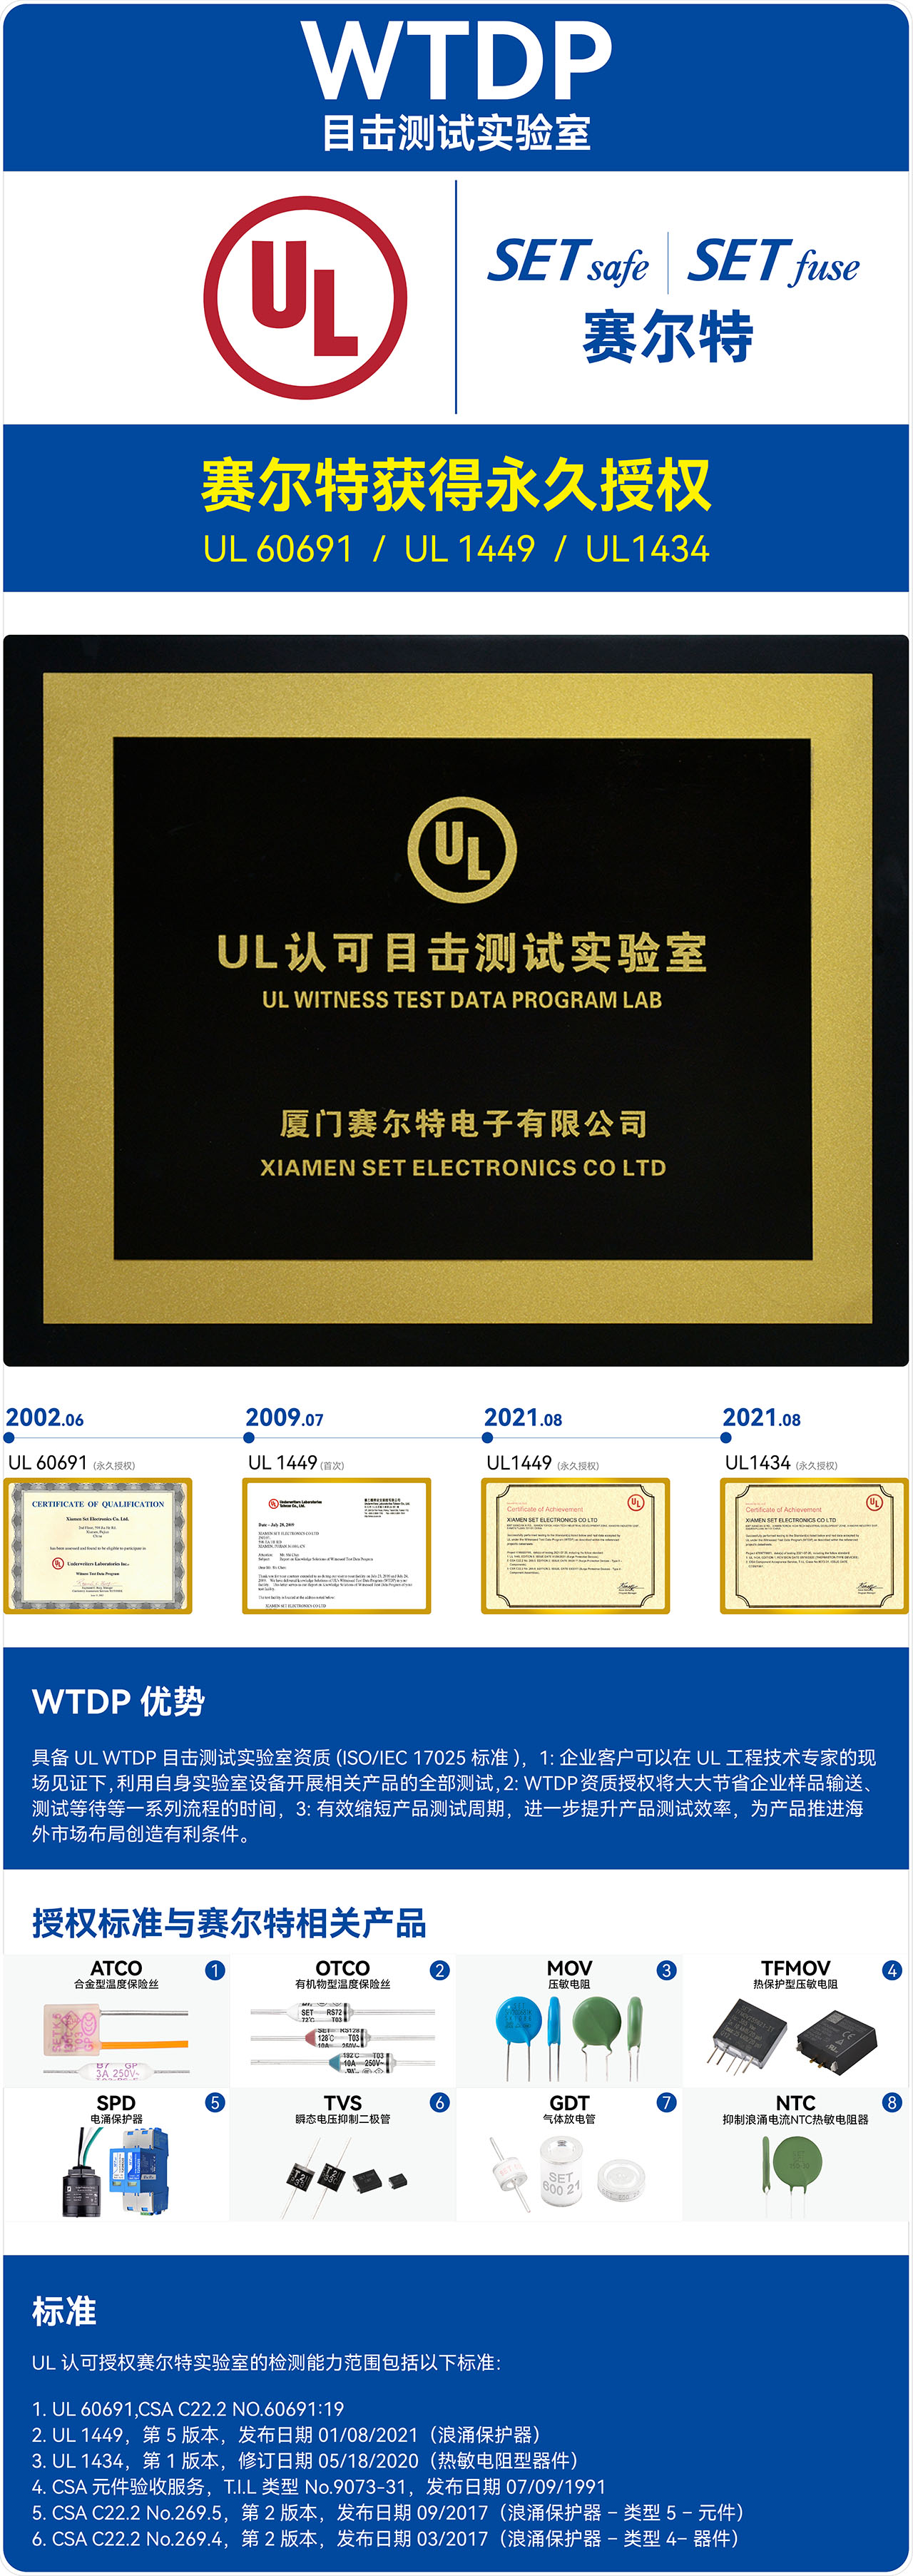 WTDP-网站-CHN_画板 1 副本 2.jpg